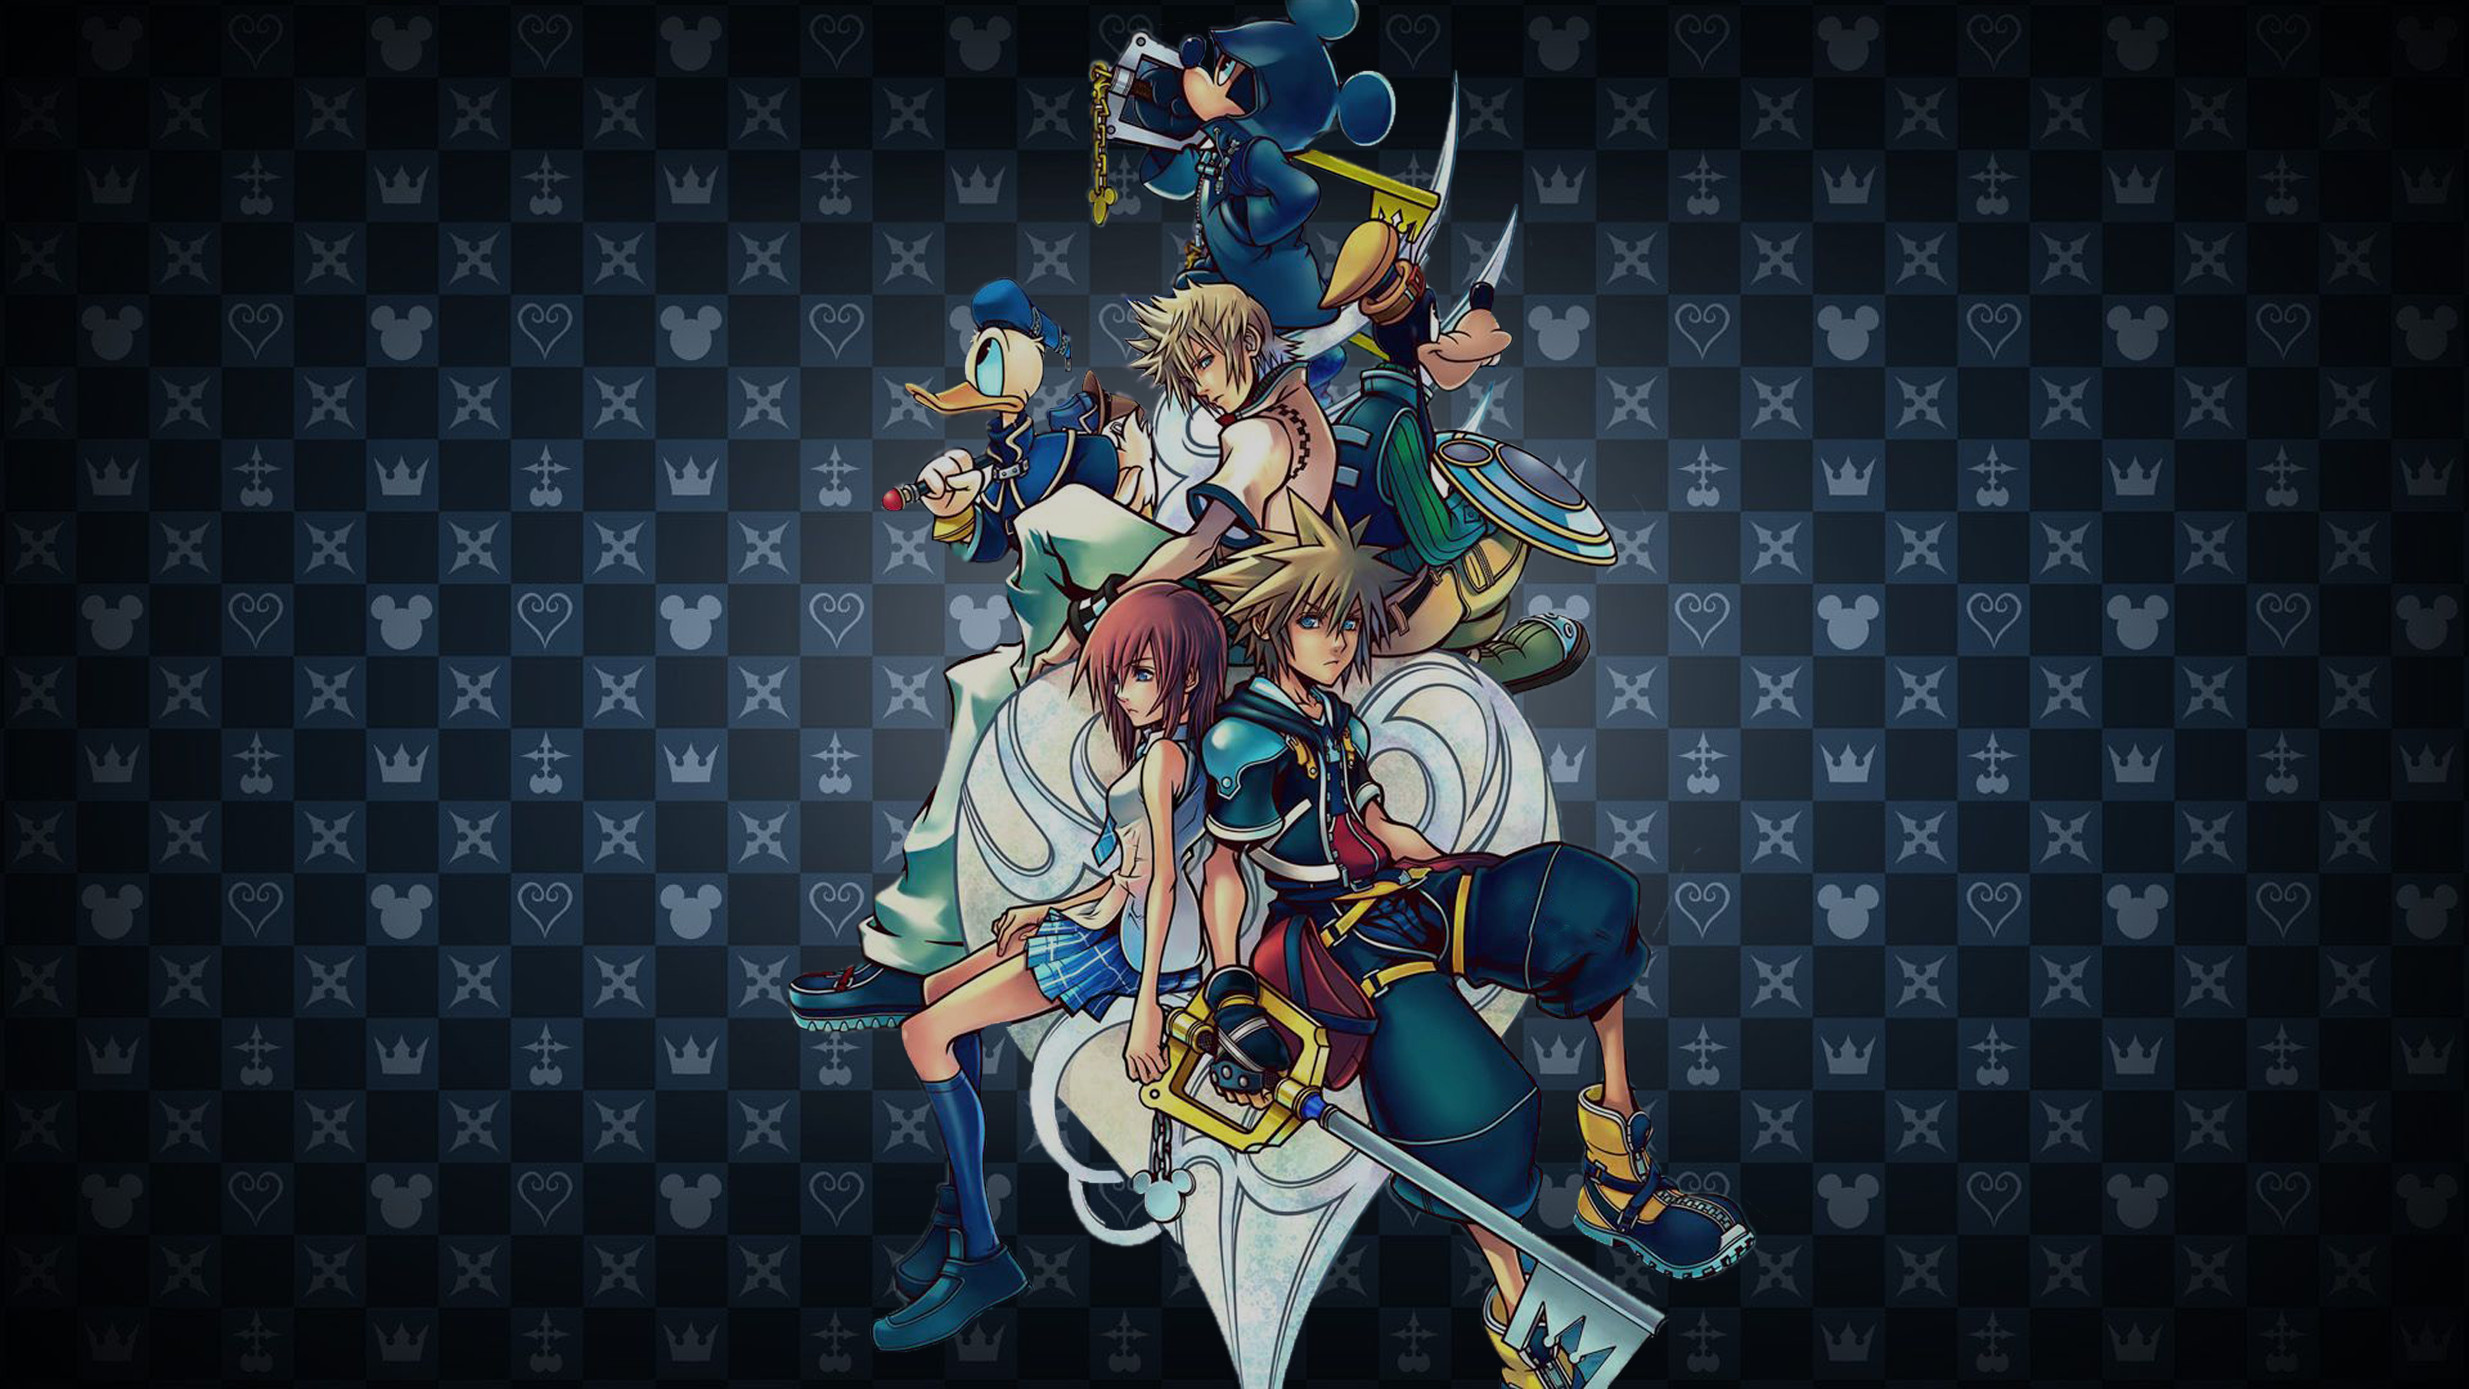 2469x1389 Kingdom Hearts wallpaper by XRyukoGC Kingdom Hearts wallpaper by XRyukoGC